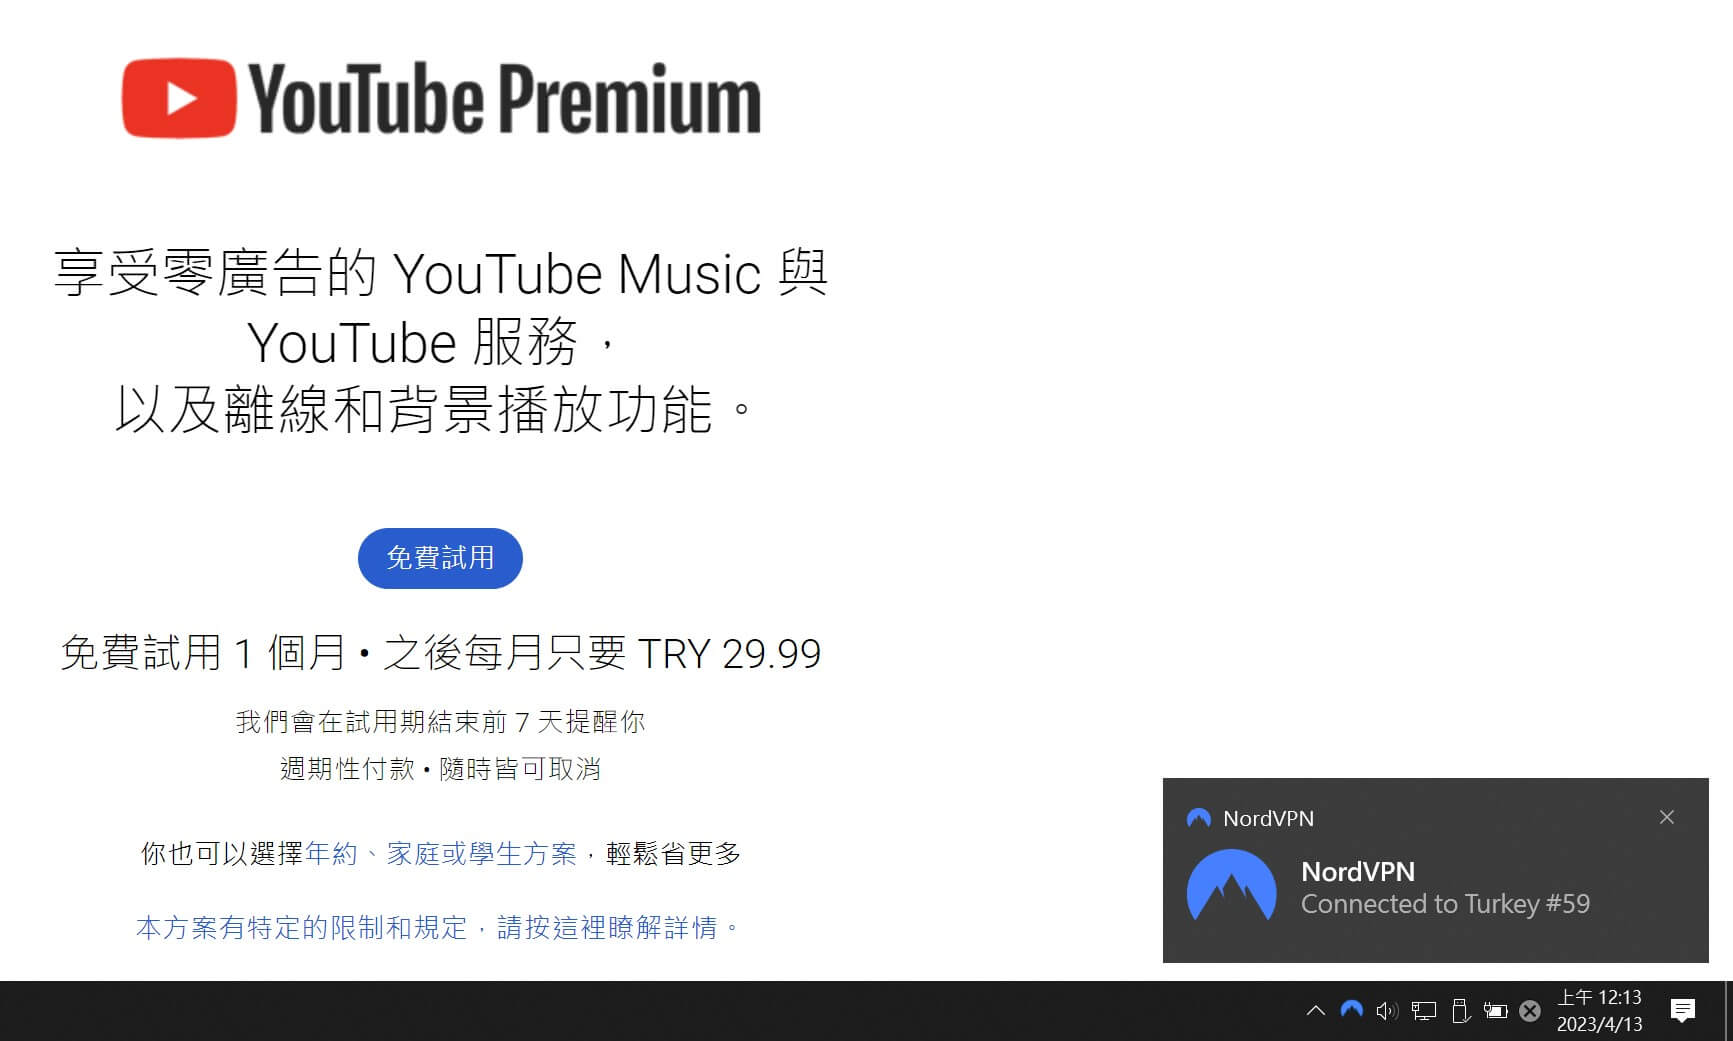 NordVPN連線至土耳其查看YouTube Premium方案